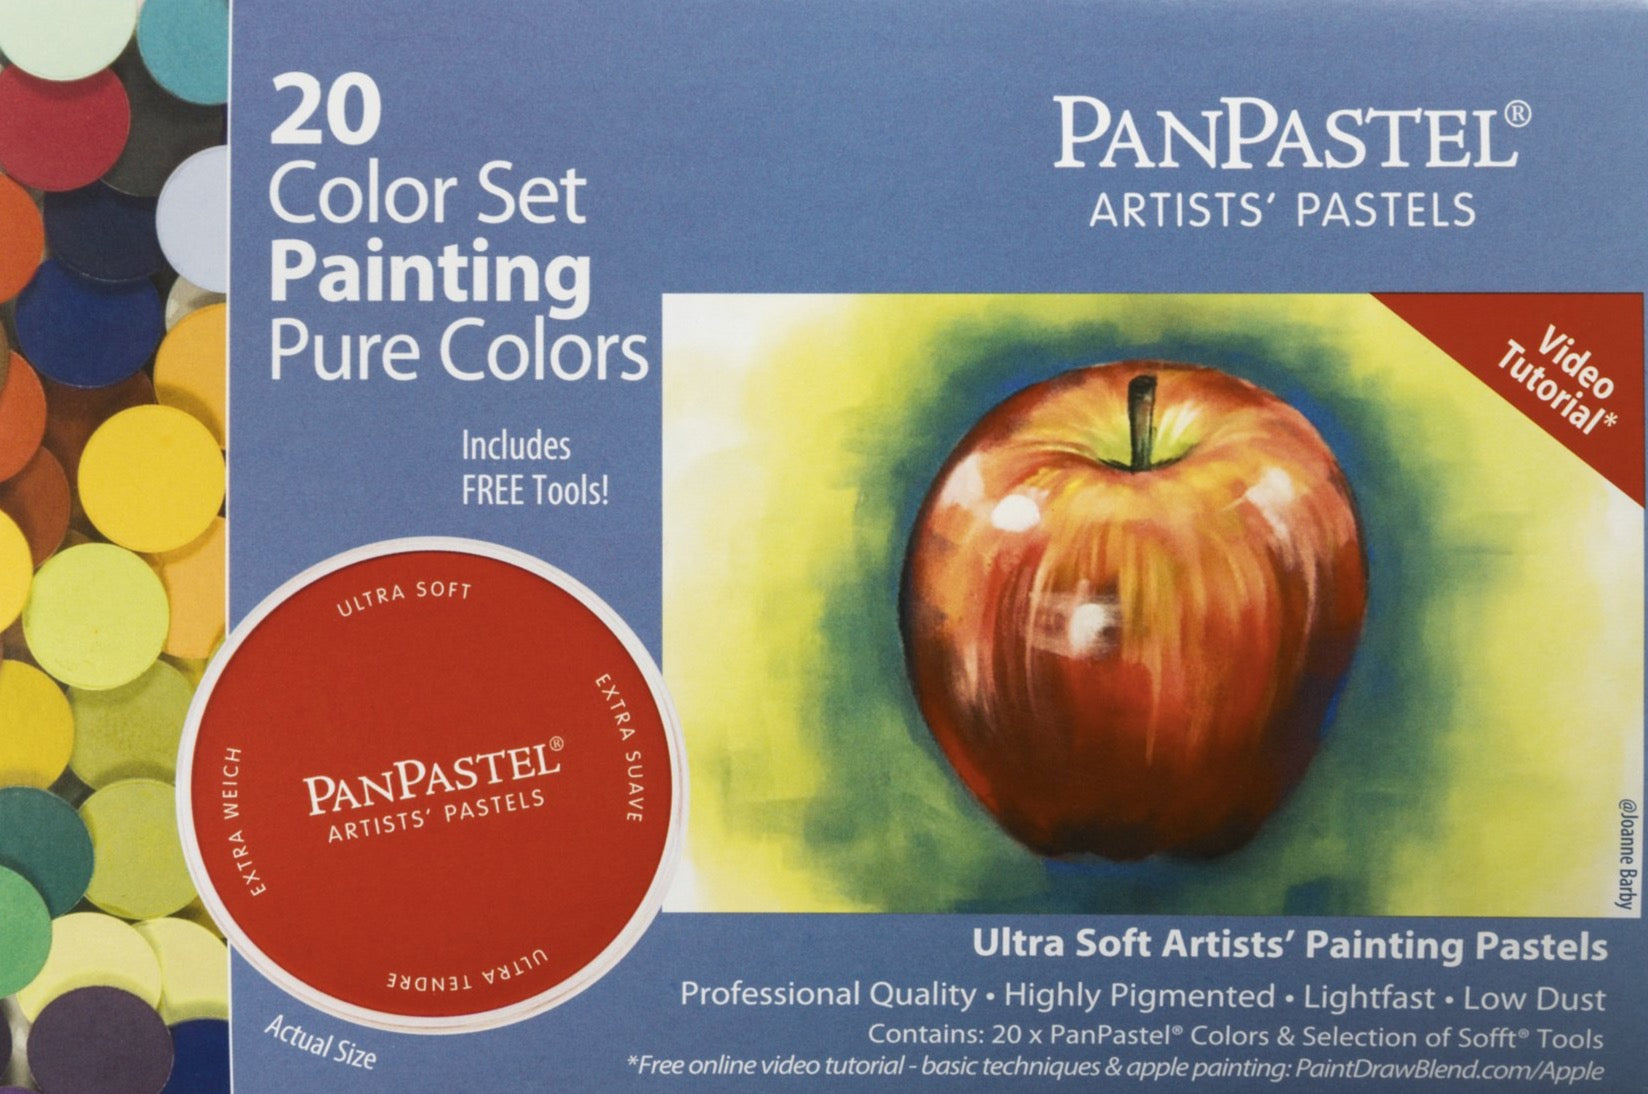 PanPastel 30201 set of 20 Pans Painting Pure Colours